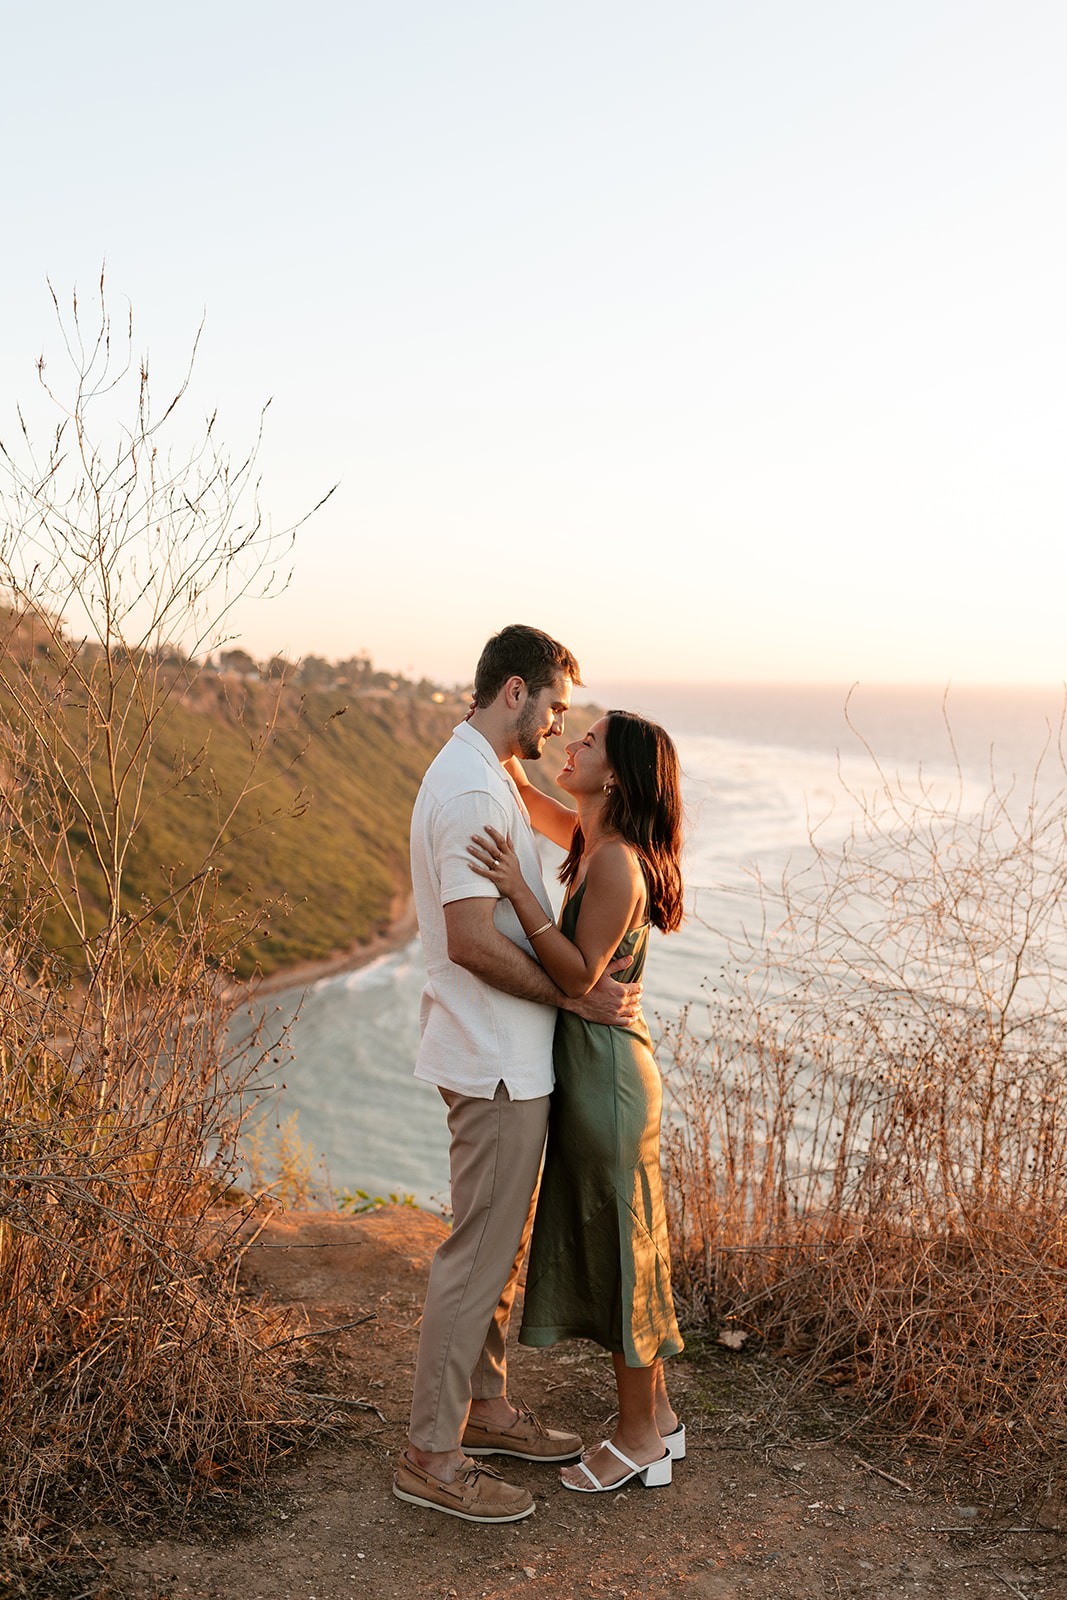 cliffside proposal engagement session palos verdes california socal couples hugging poses foot pop princess foot pop